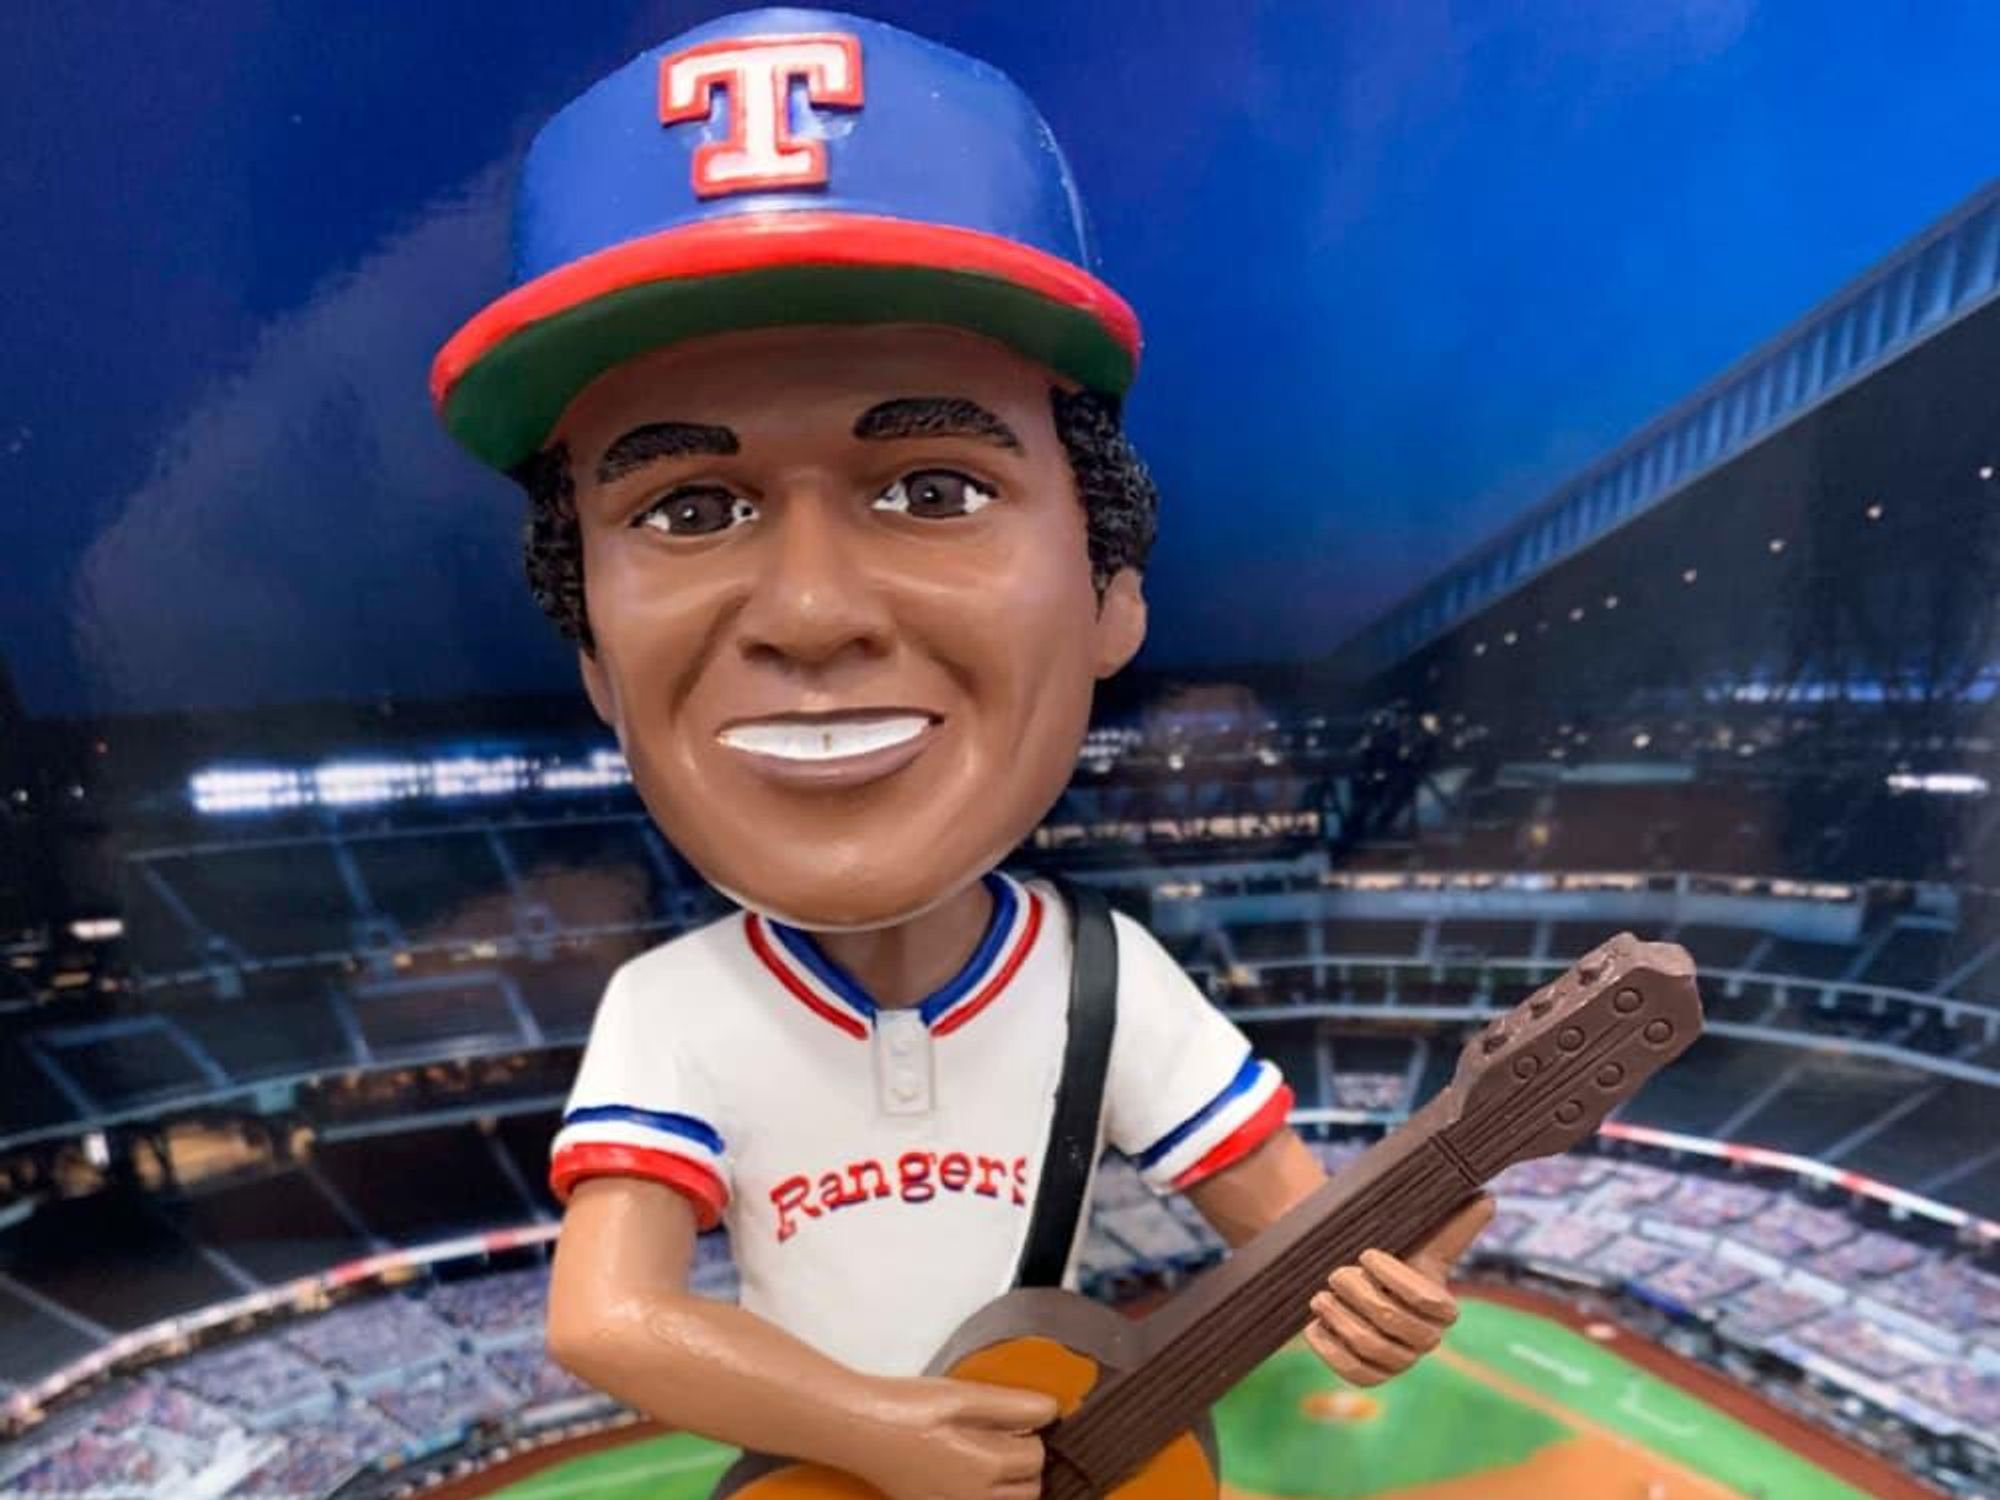 Rangers Captain Texas Rangers 2023 City Connect Mascot Bobblehead